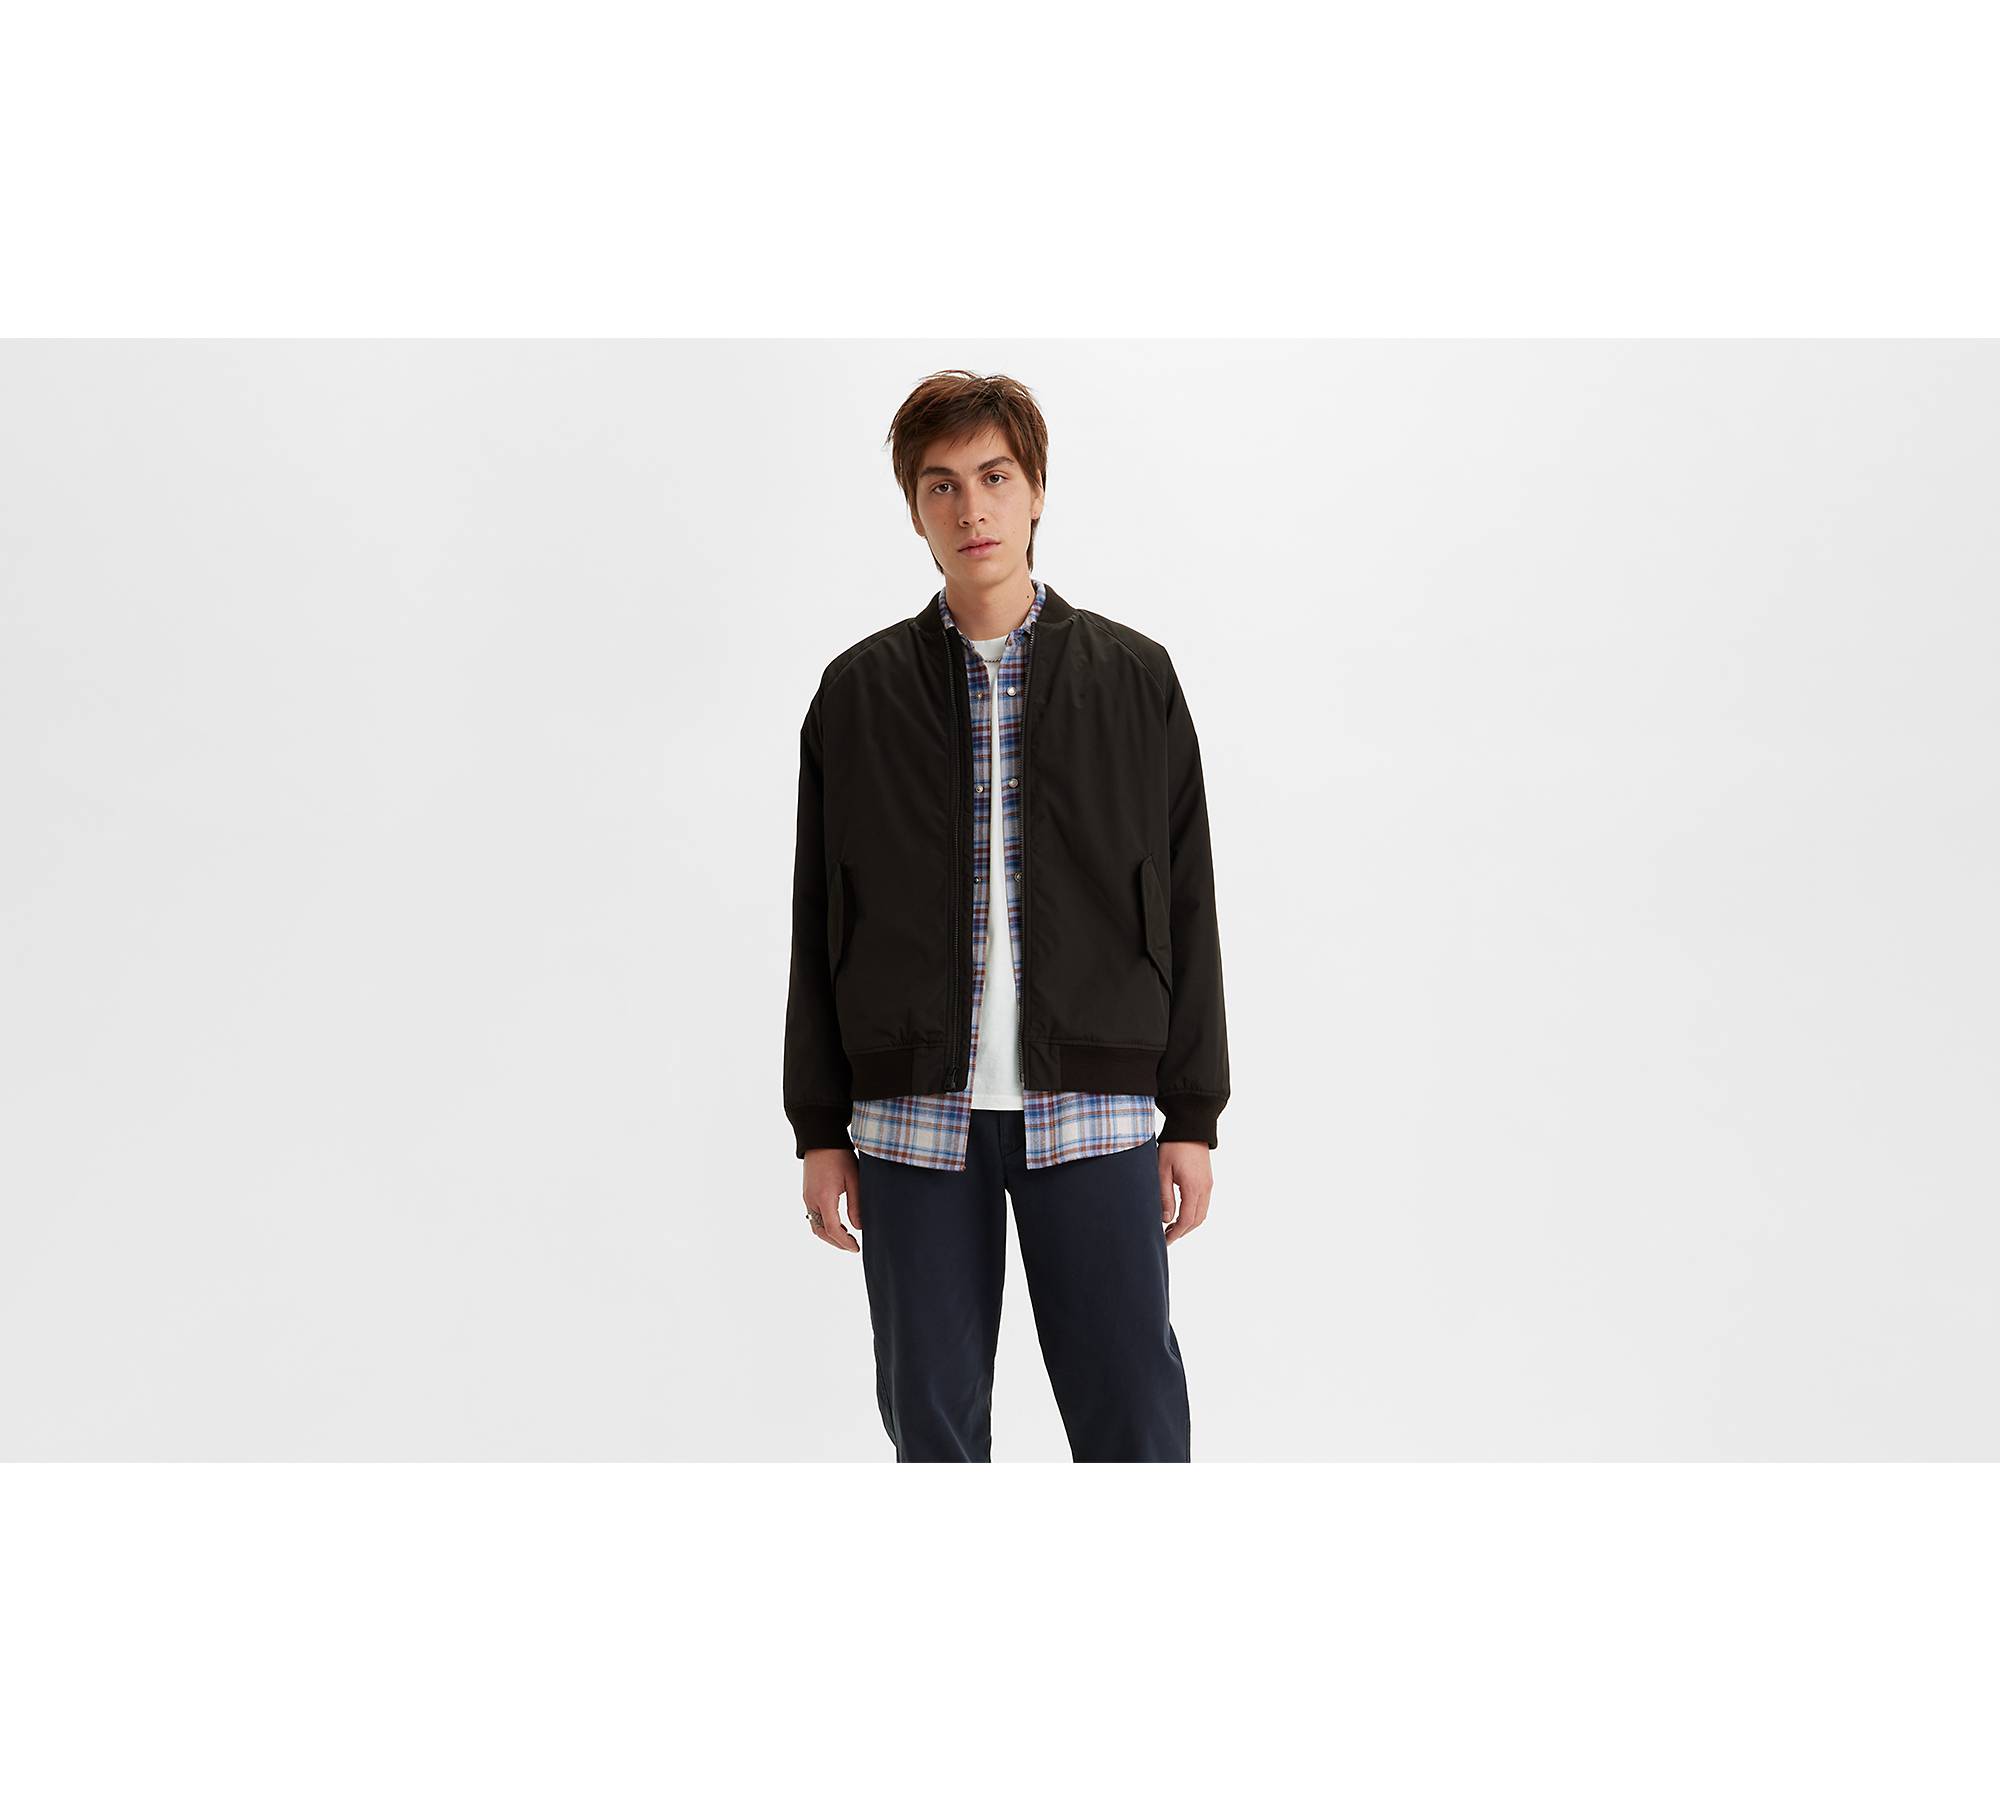 black varsity jacket male winter solid slit pocket jacket long sleeve  zipper fly pocket jacket coat